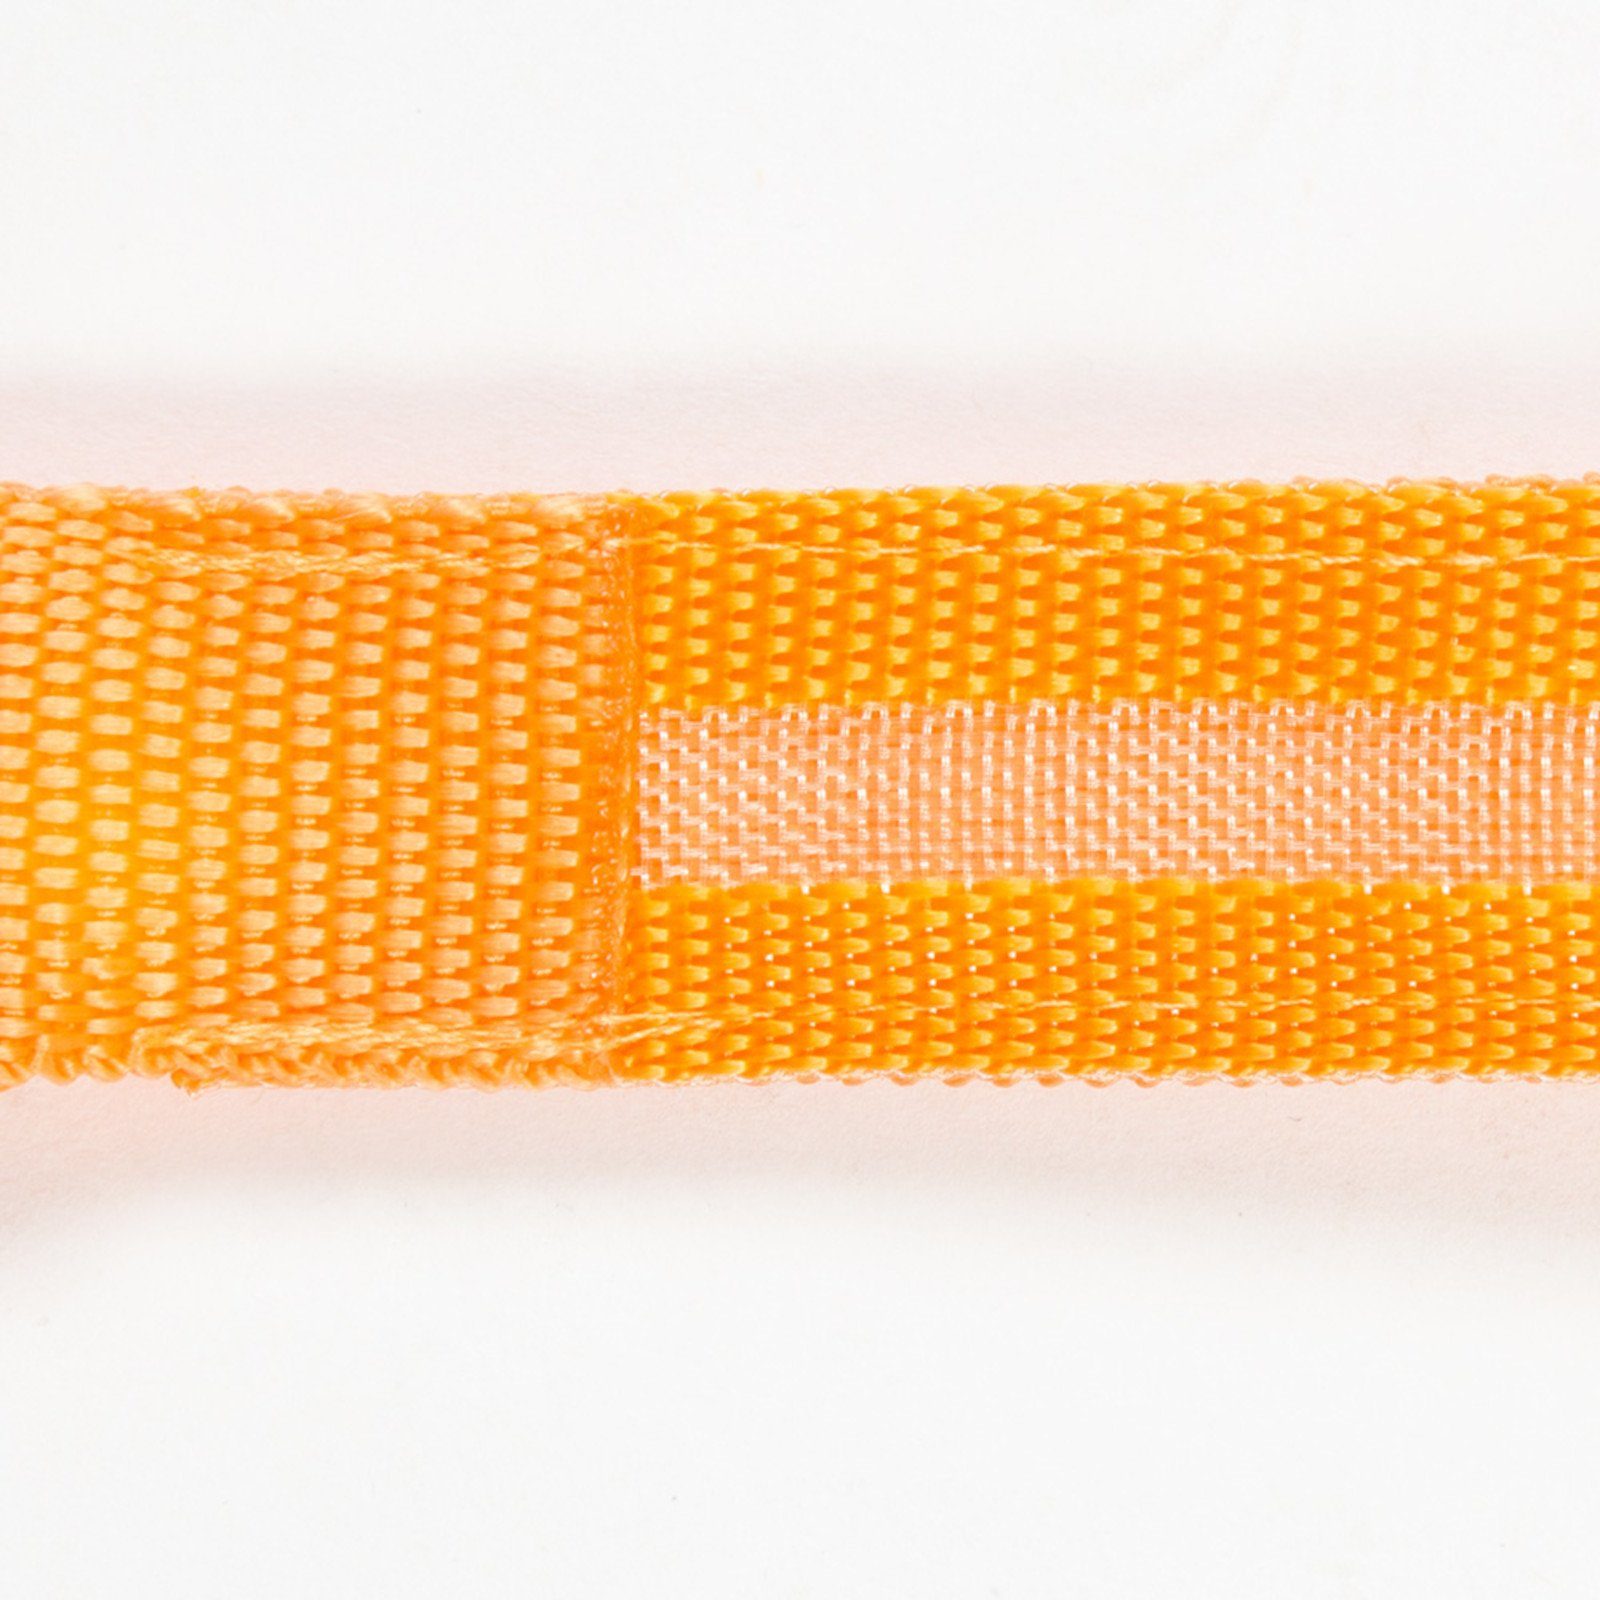 PFIFF Vorderzeug Pfiff LED Warmblut, - (orange orange - Warmblut) - Reflektions-Vorderzeug